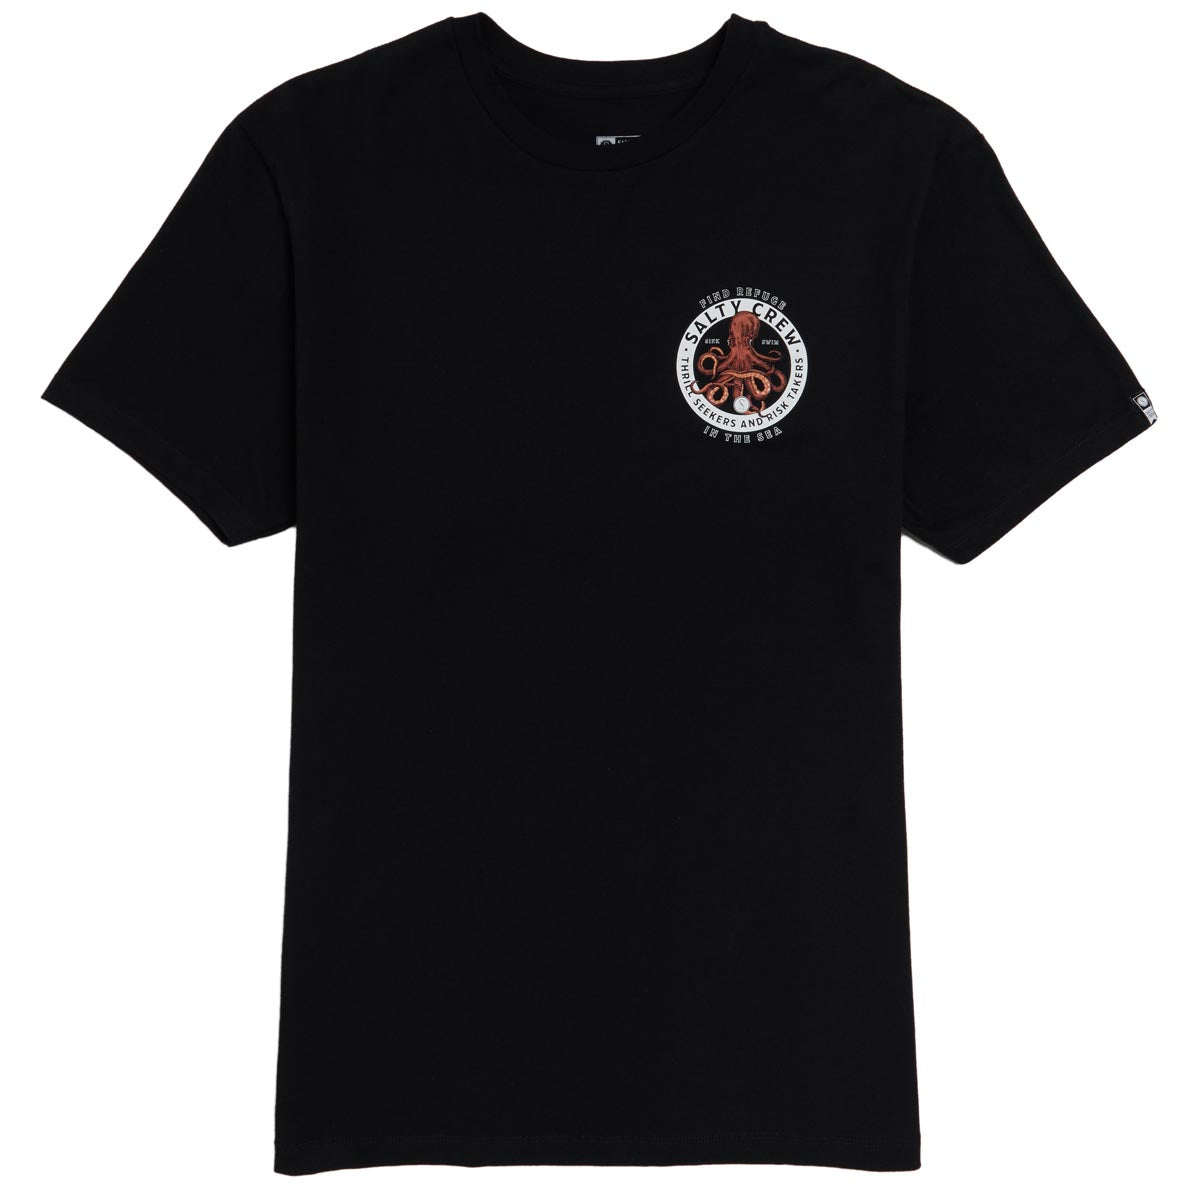 Salty Crew Deep Reach Premium T-Shirt - Black image 2